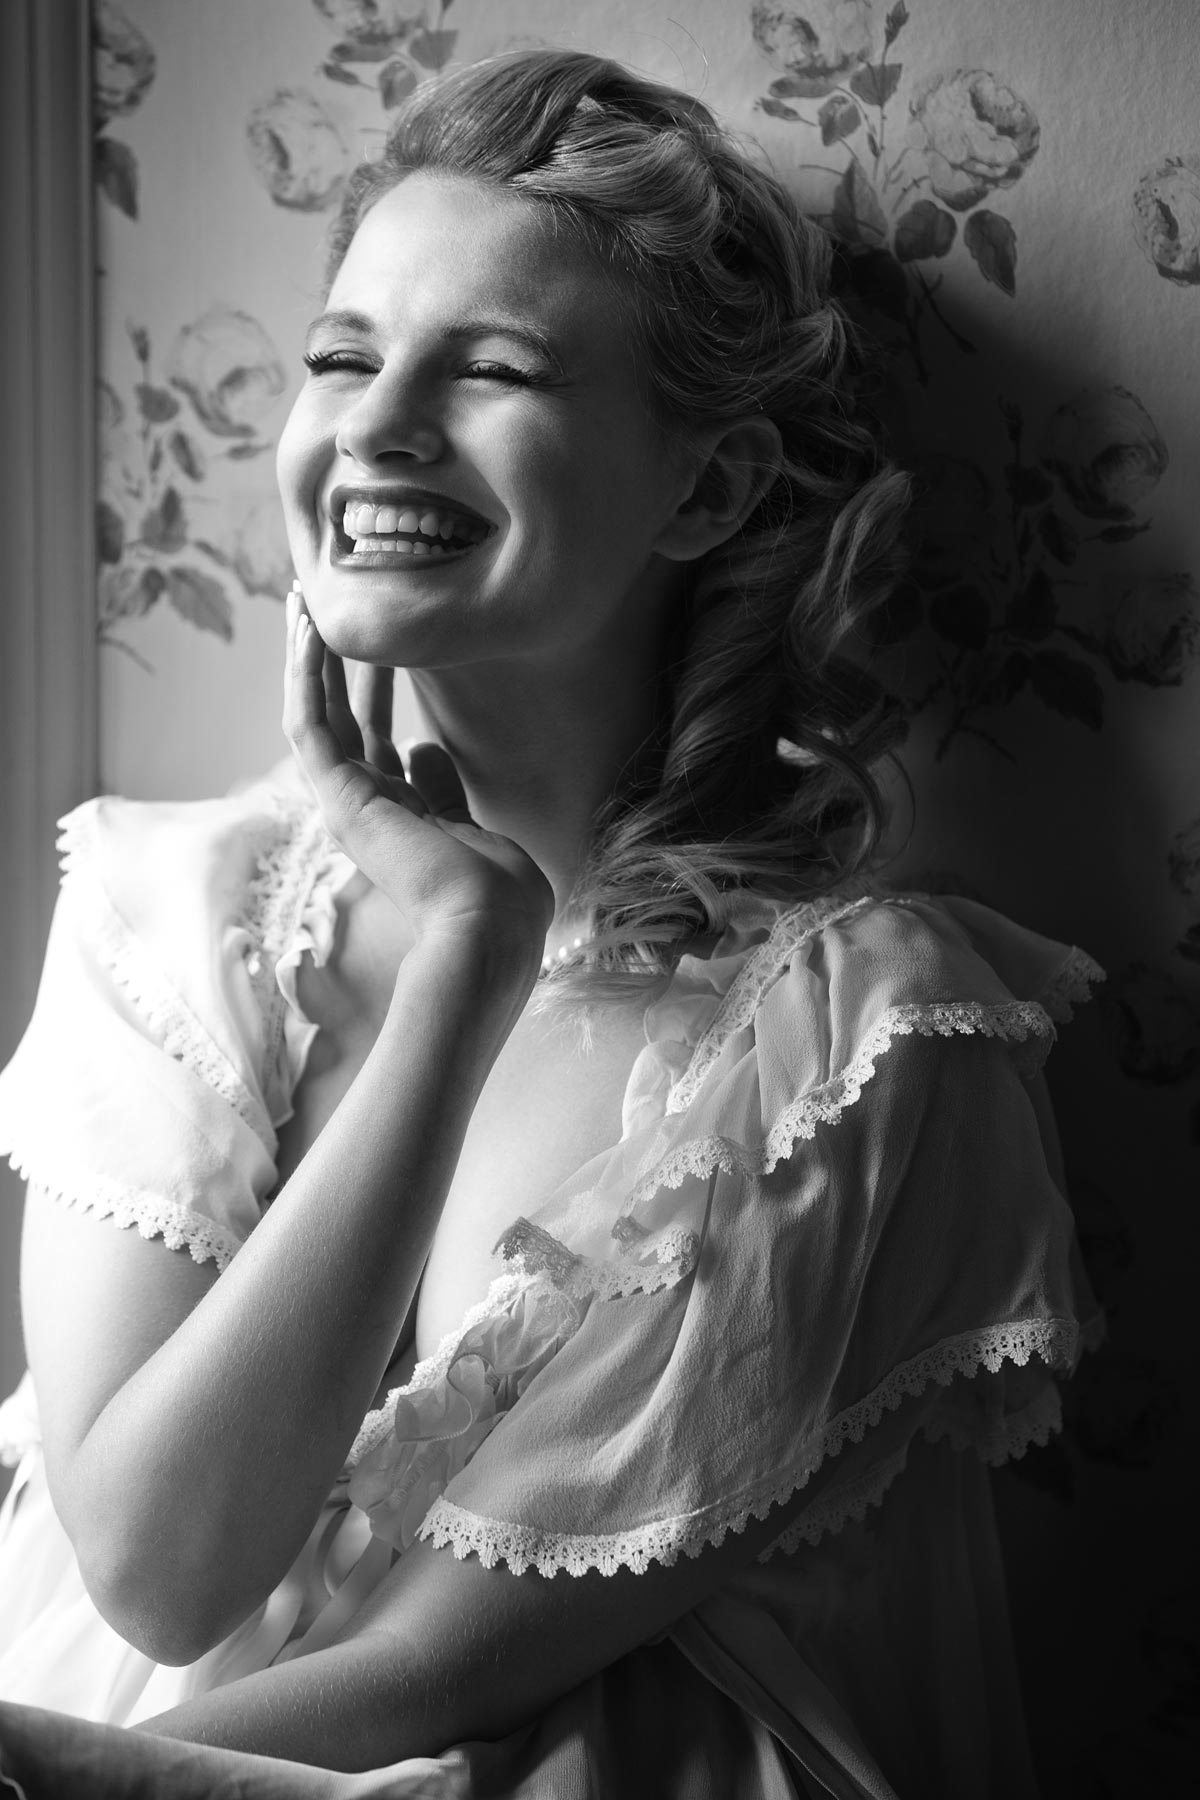 Chloe-Jasmine Whichello laughing by Damien Lovegrove